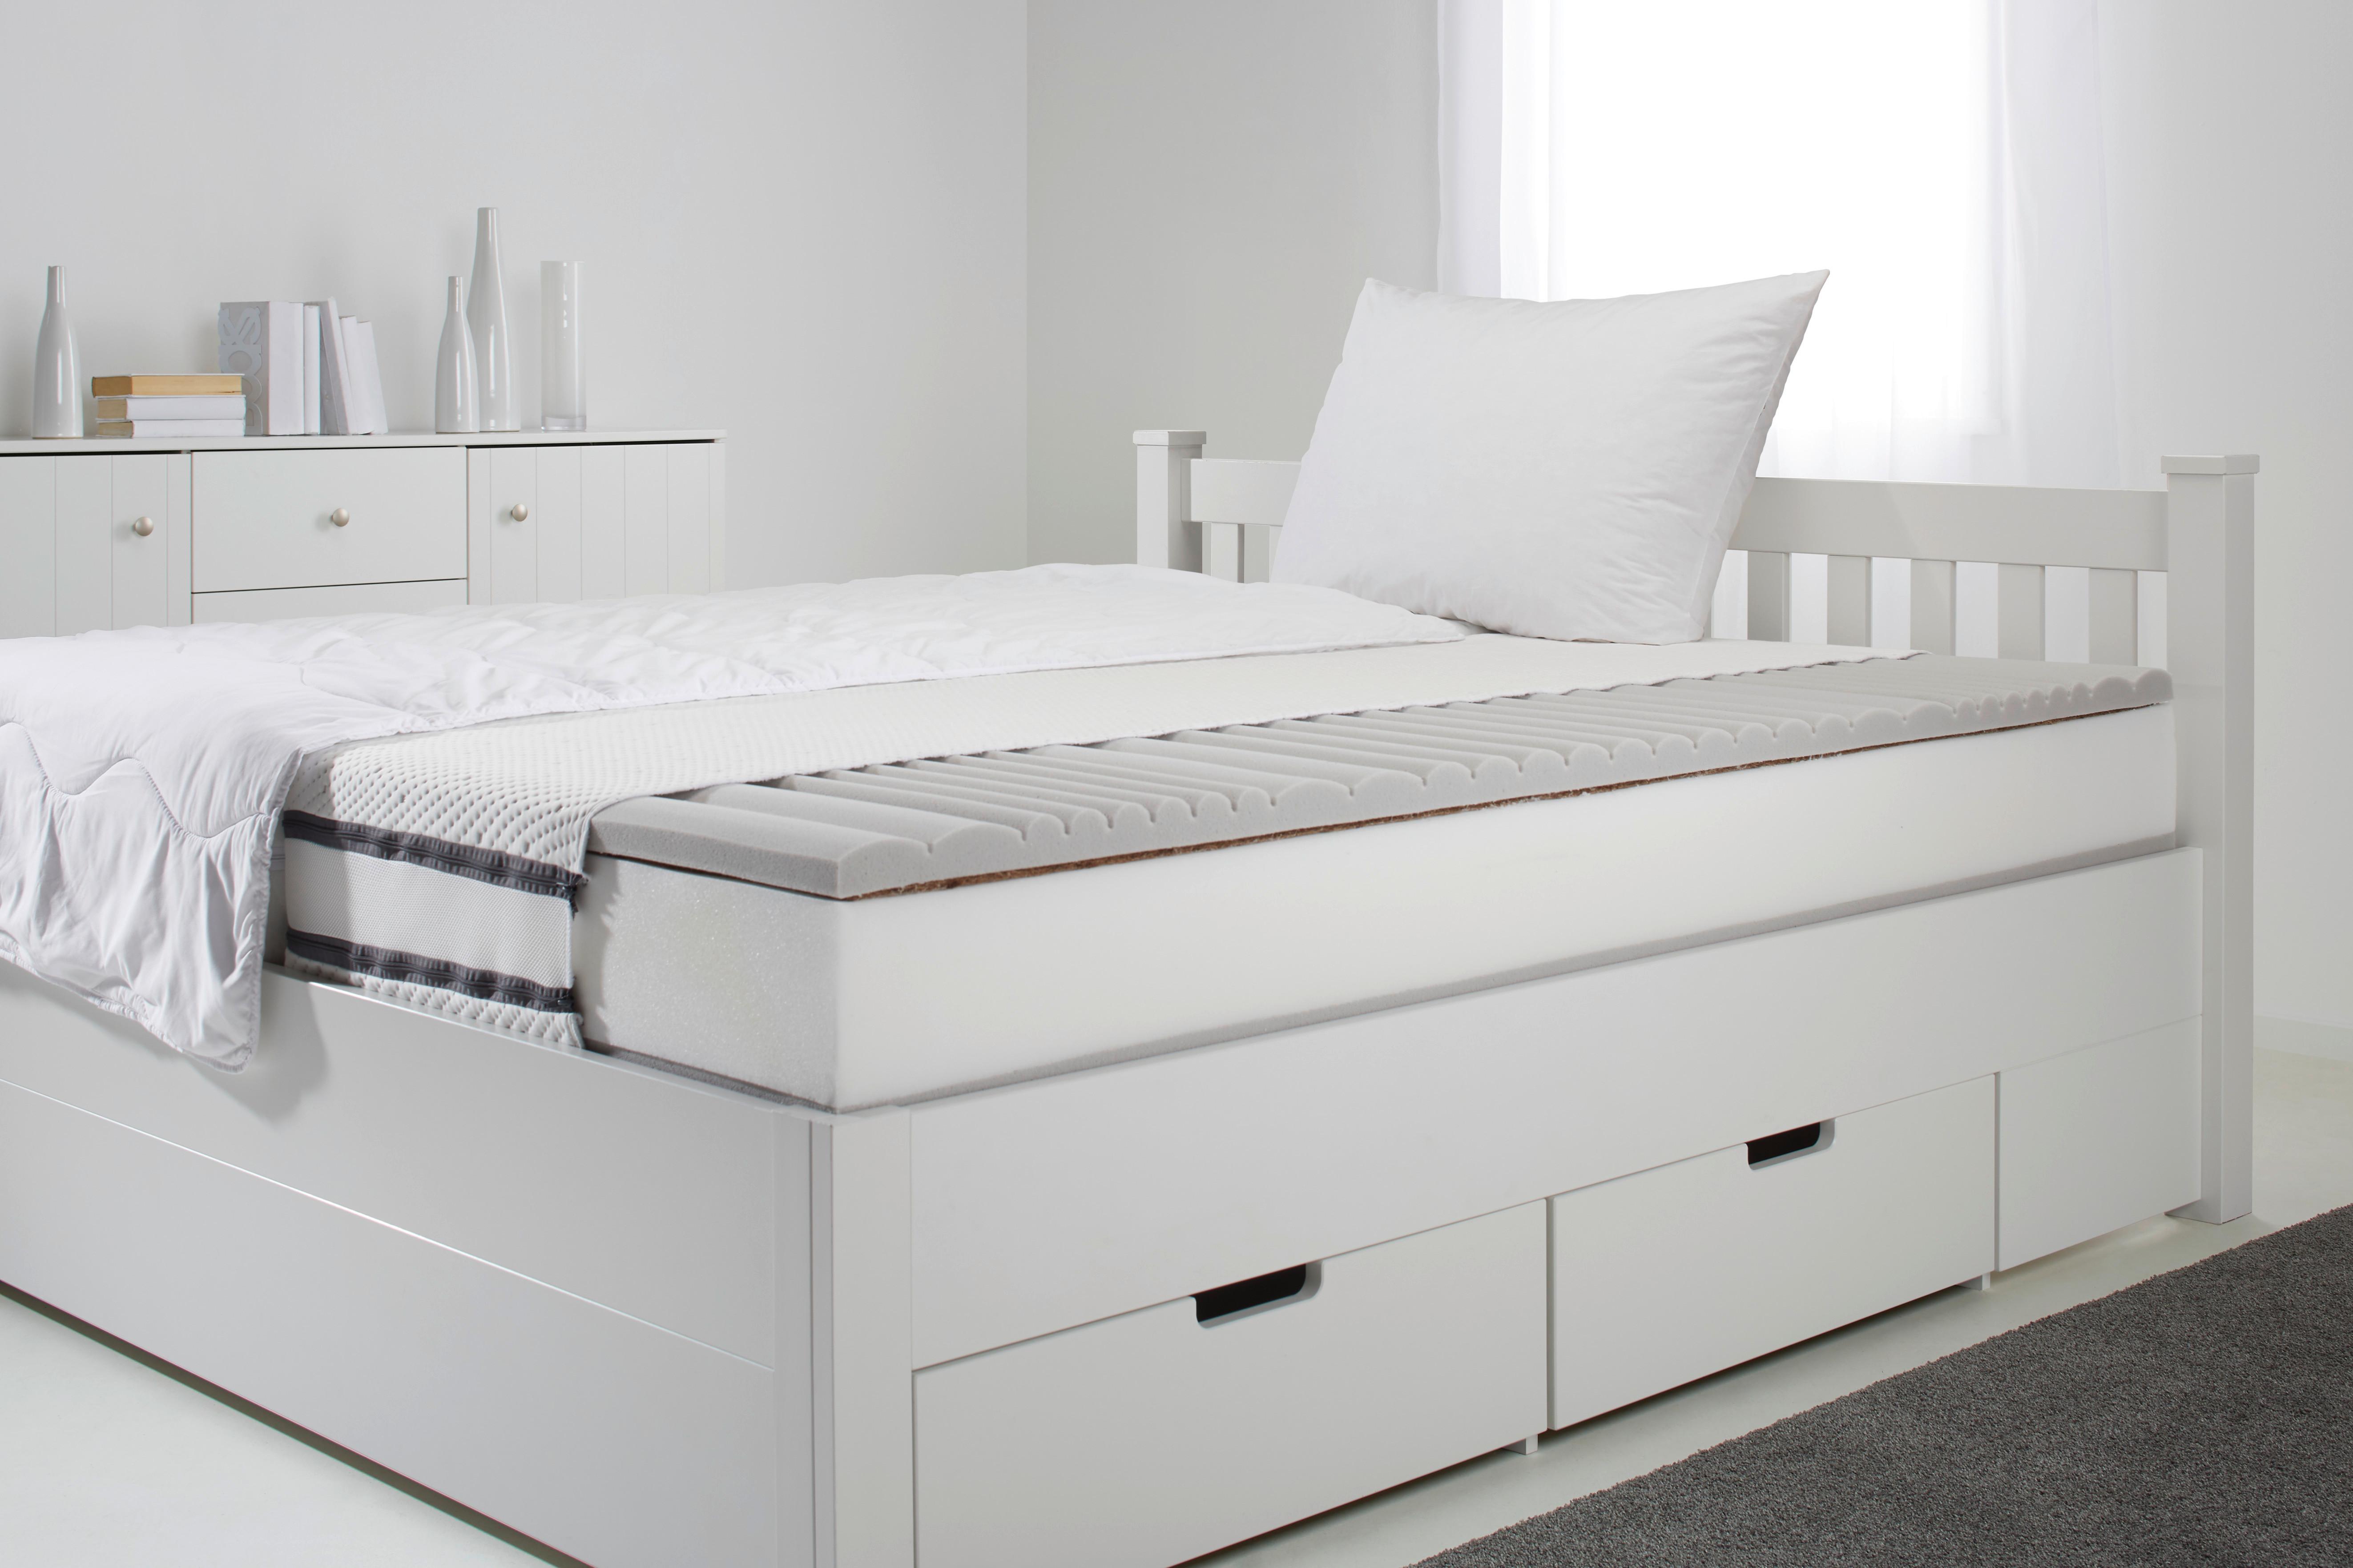 Kaltschaummatratze ca. 90x200cm - Weiß, Textil (90/200cm) - Premium Living